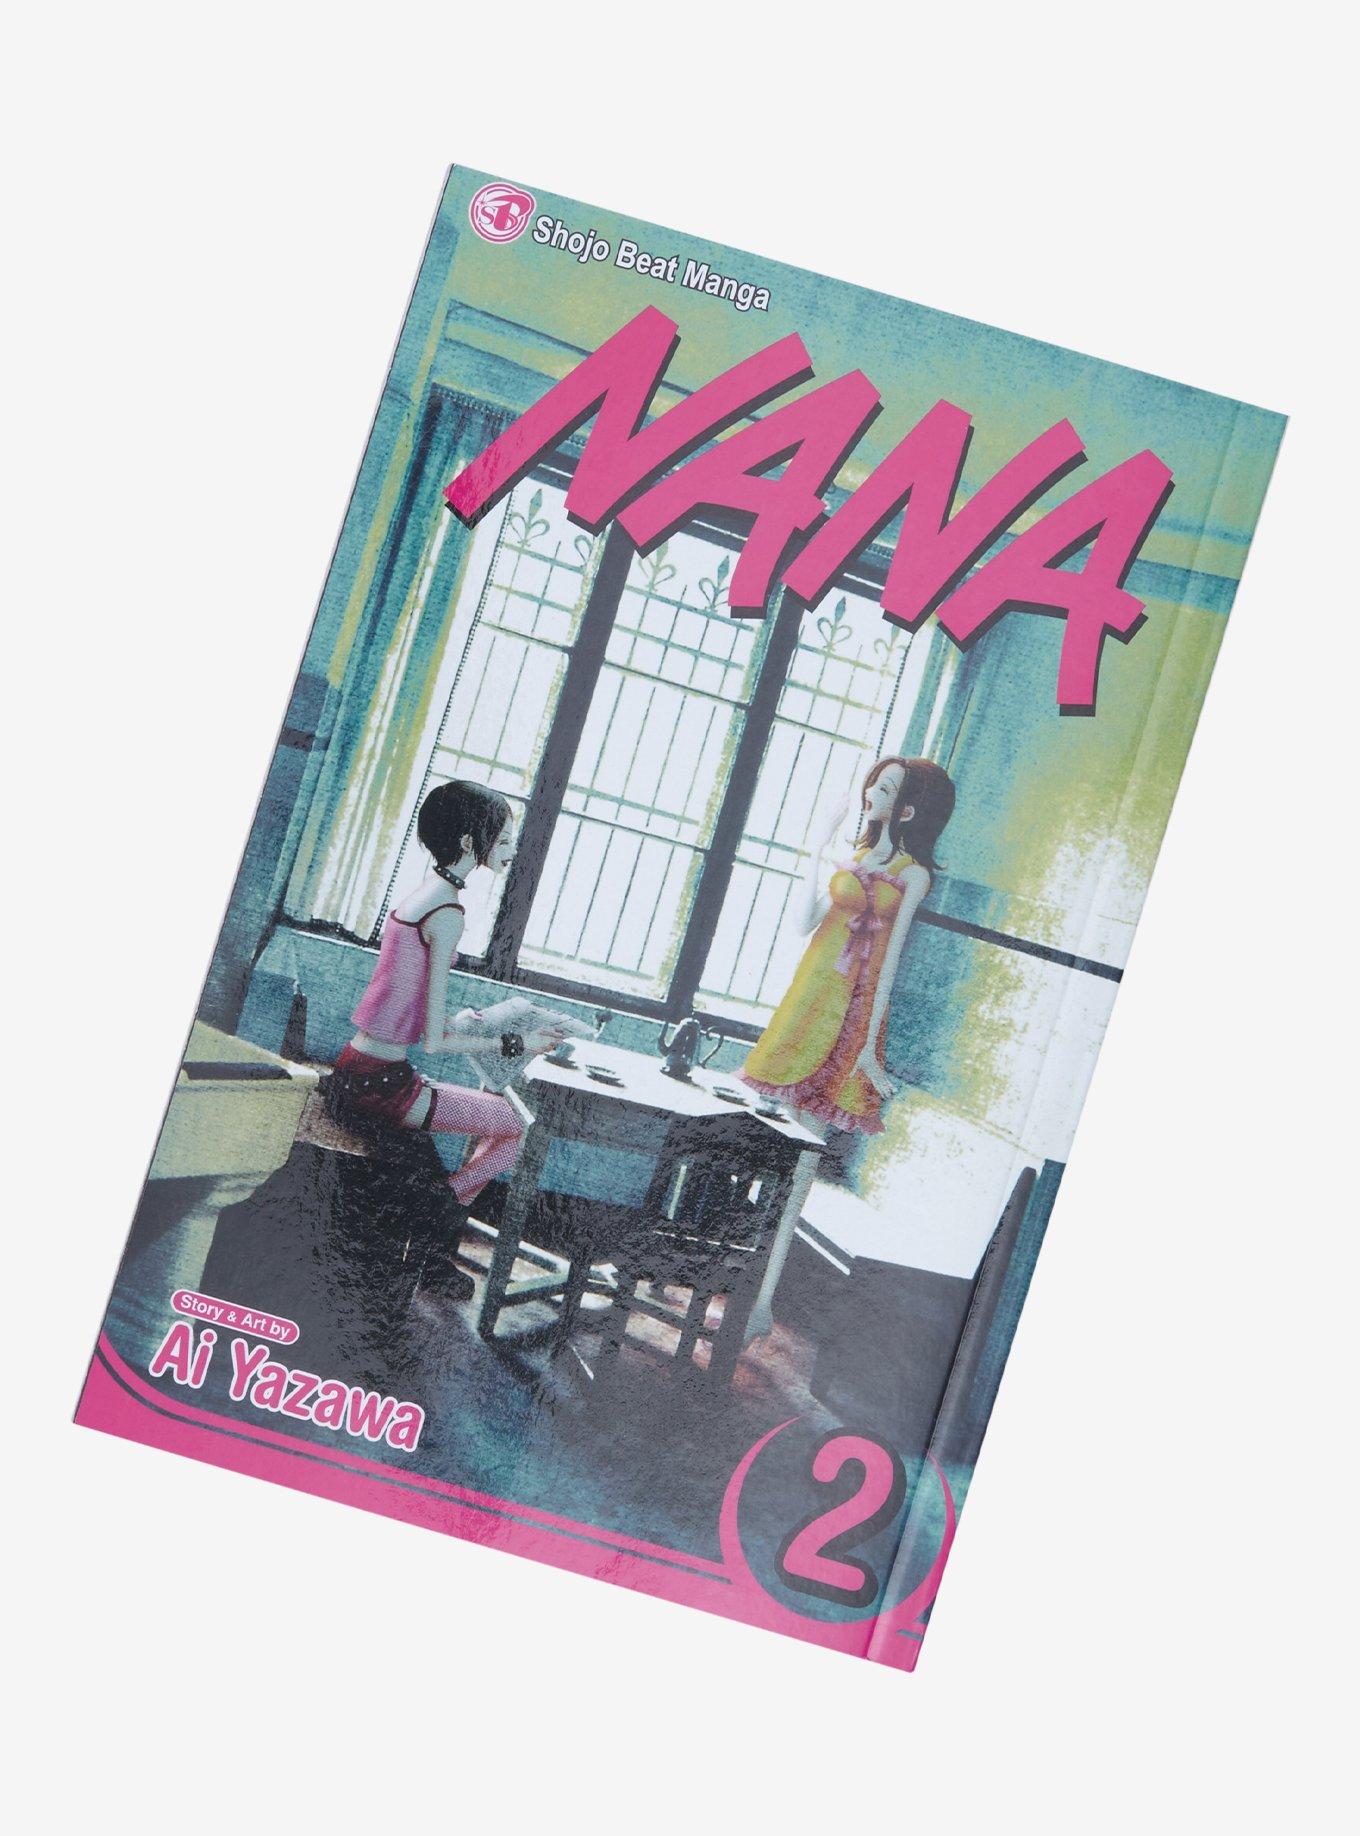 Nana Volume 2 Manga Hot Topic picture